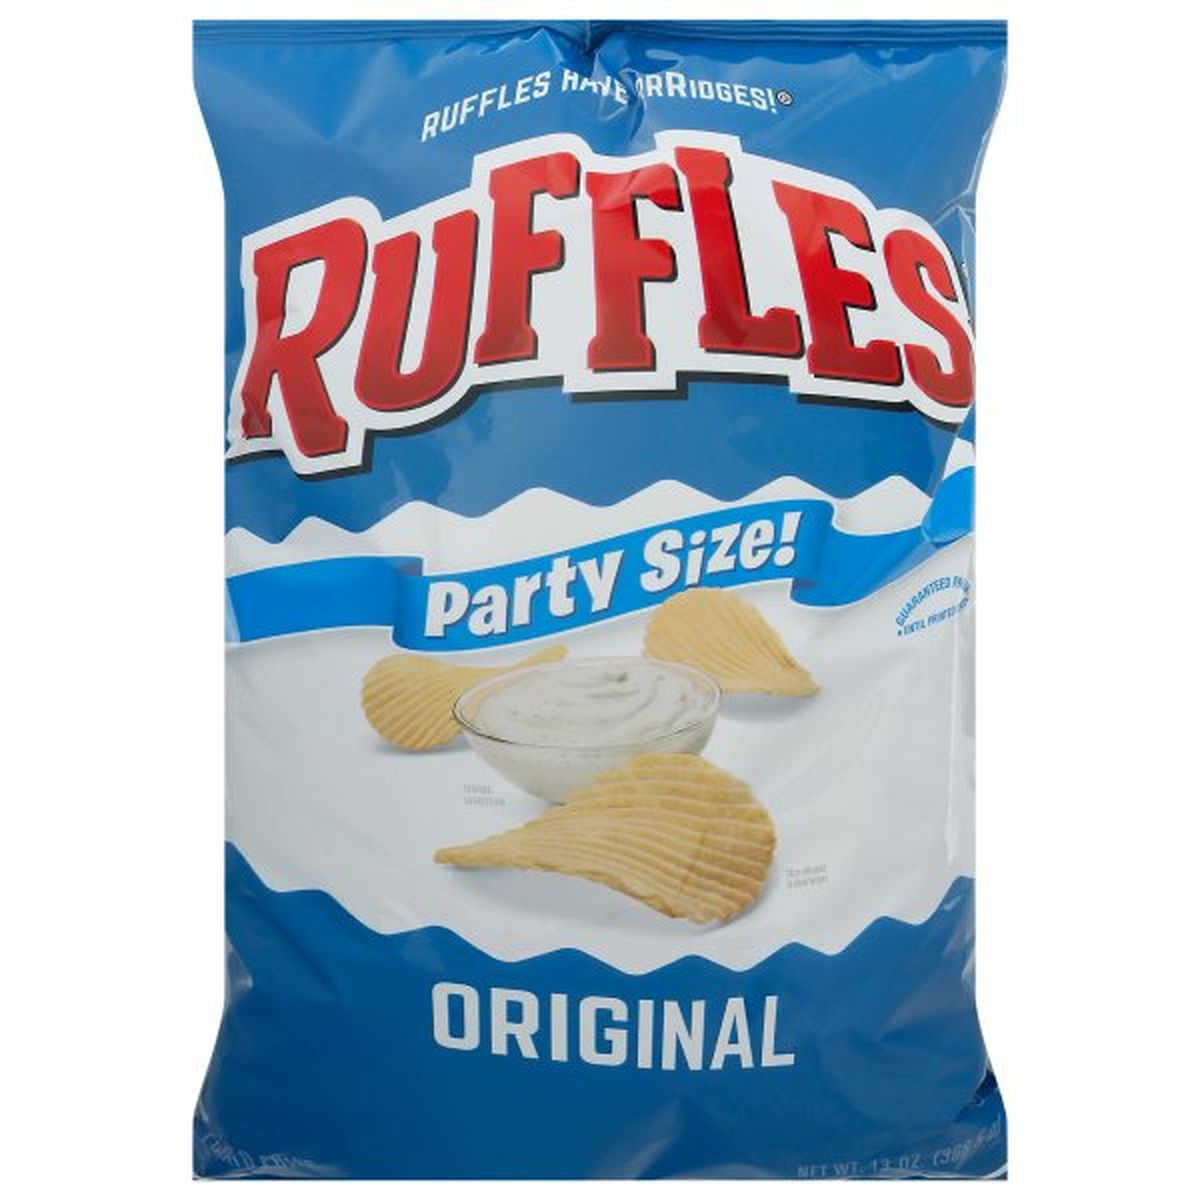 Calories in Ruffles Potato Chips, Original, Party Size